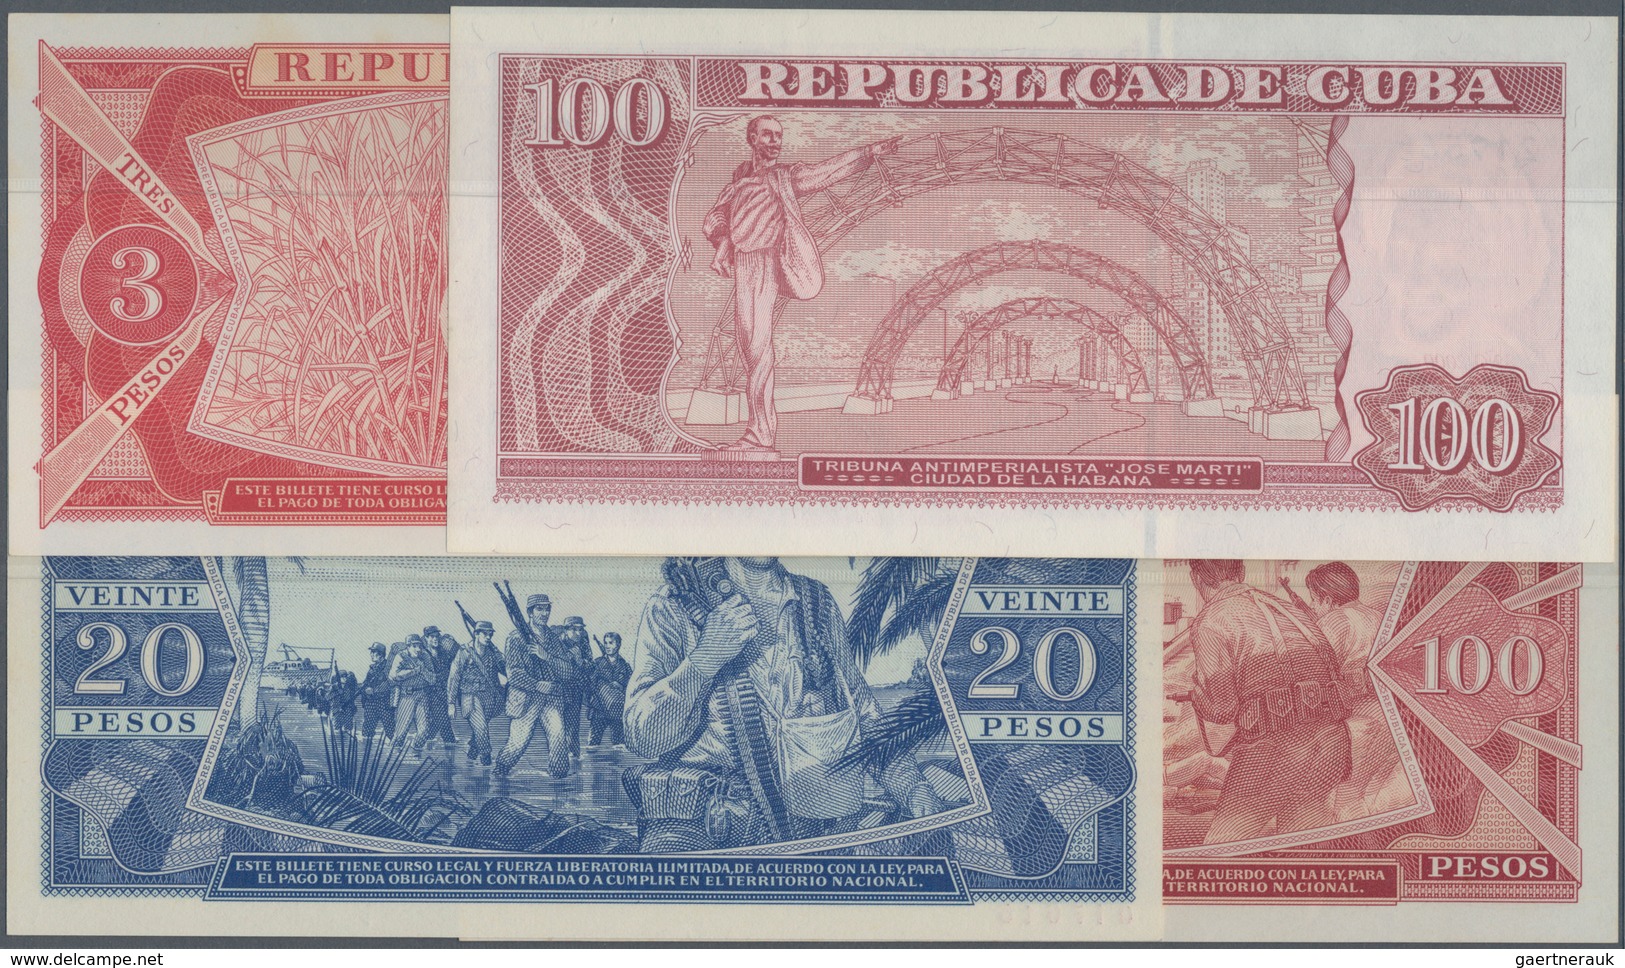 Cuba: Huge Lot With 51 Banknotes Cuba 1 - 100 Pesos Series 1961-2000 Including 100 Pesos 1961 Specim - Kuba